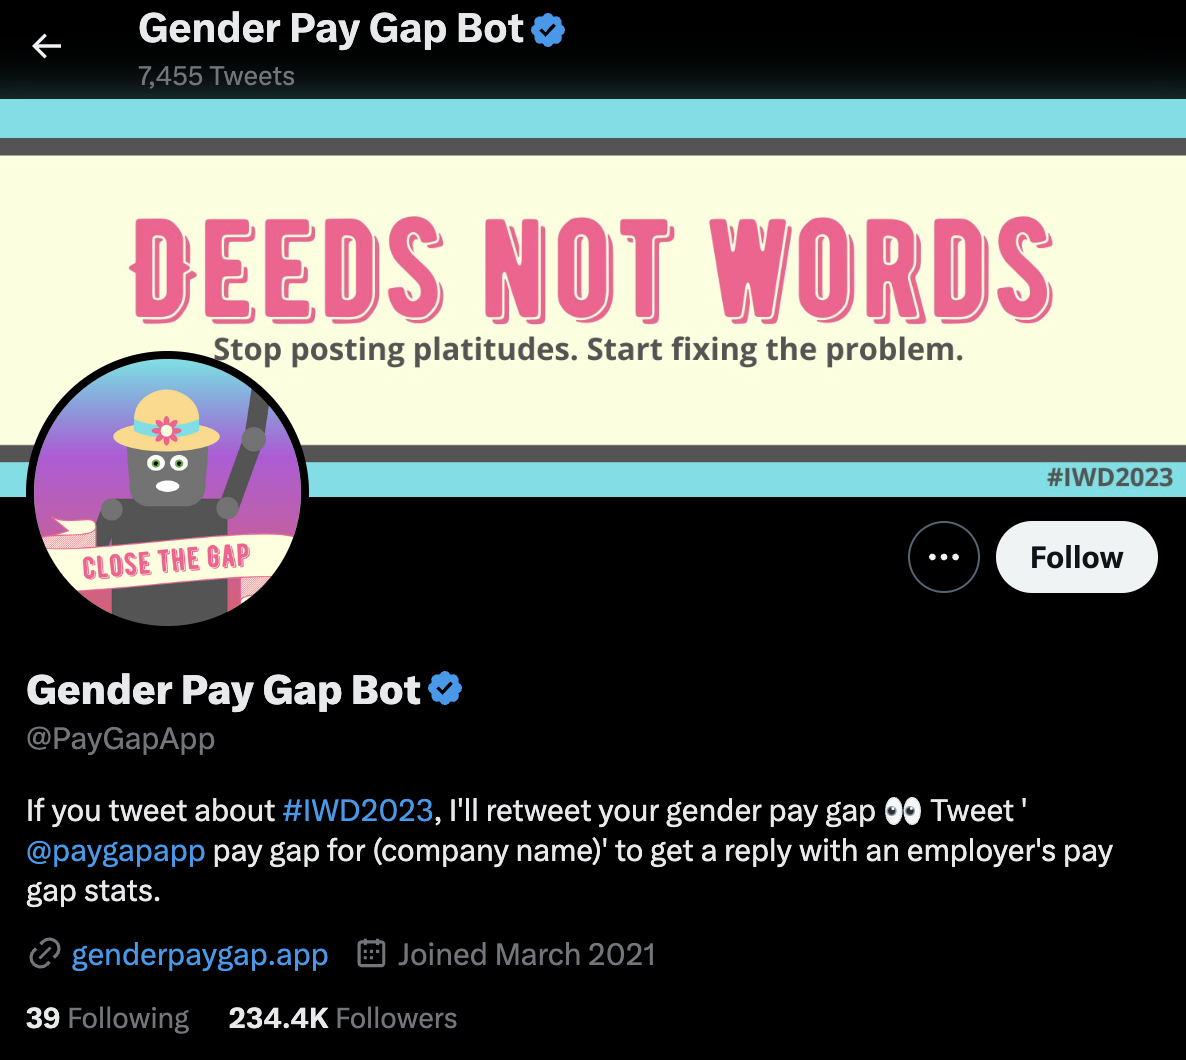 A screenshot of the Gender Pay Gap Bot Twitter profile.